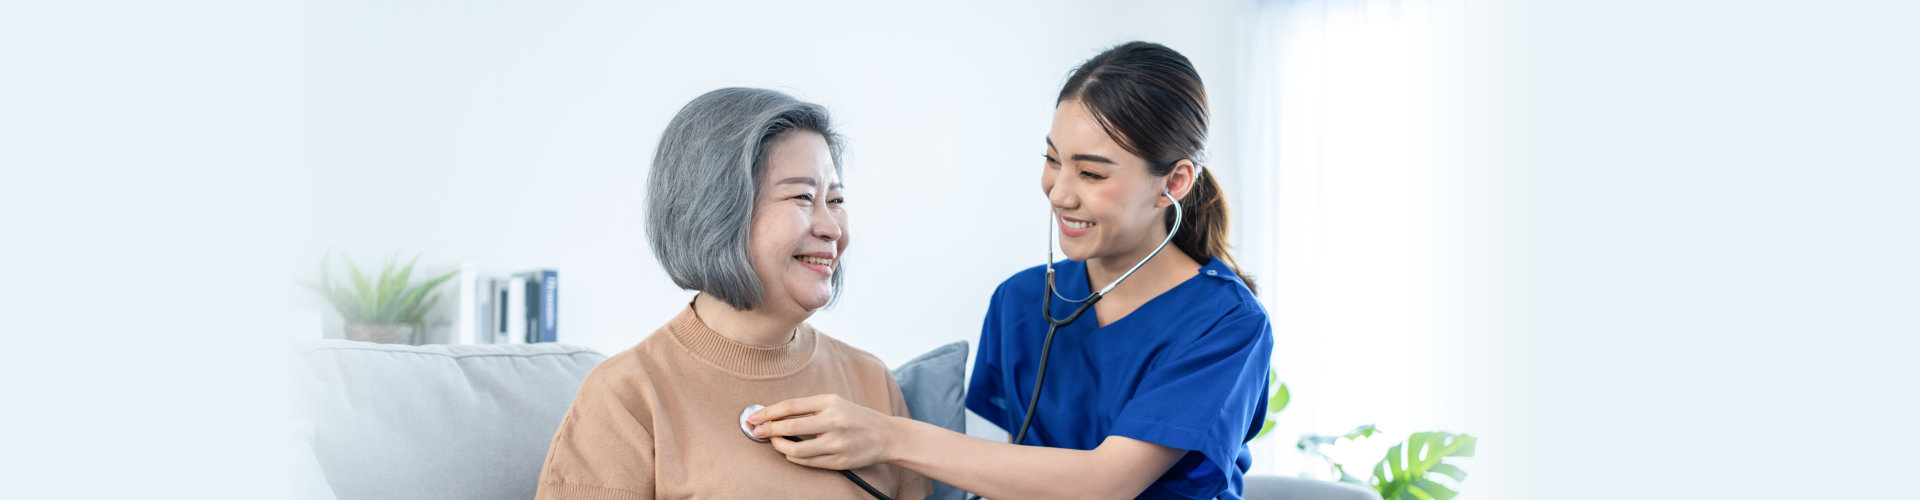 nurse checking the health of a senior woman while smiling